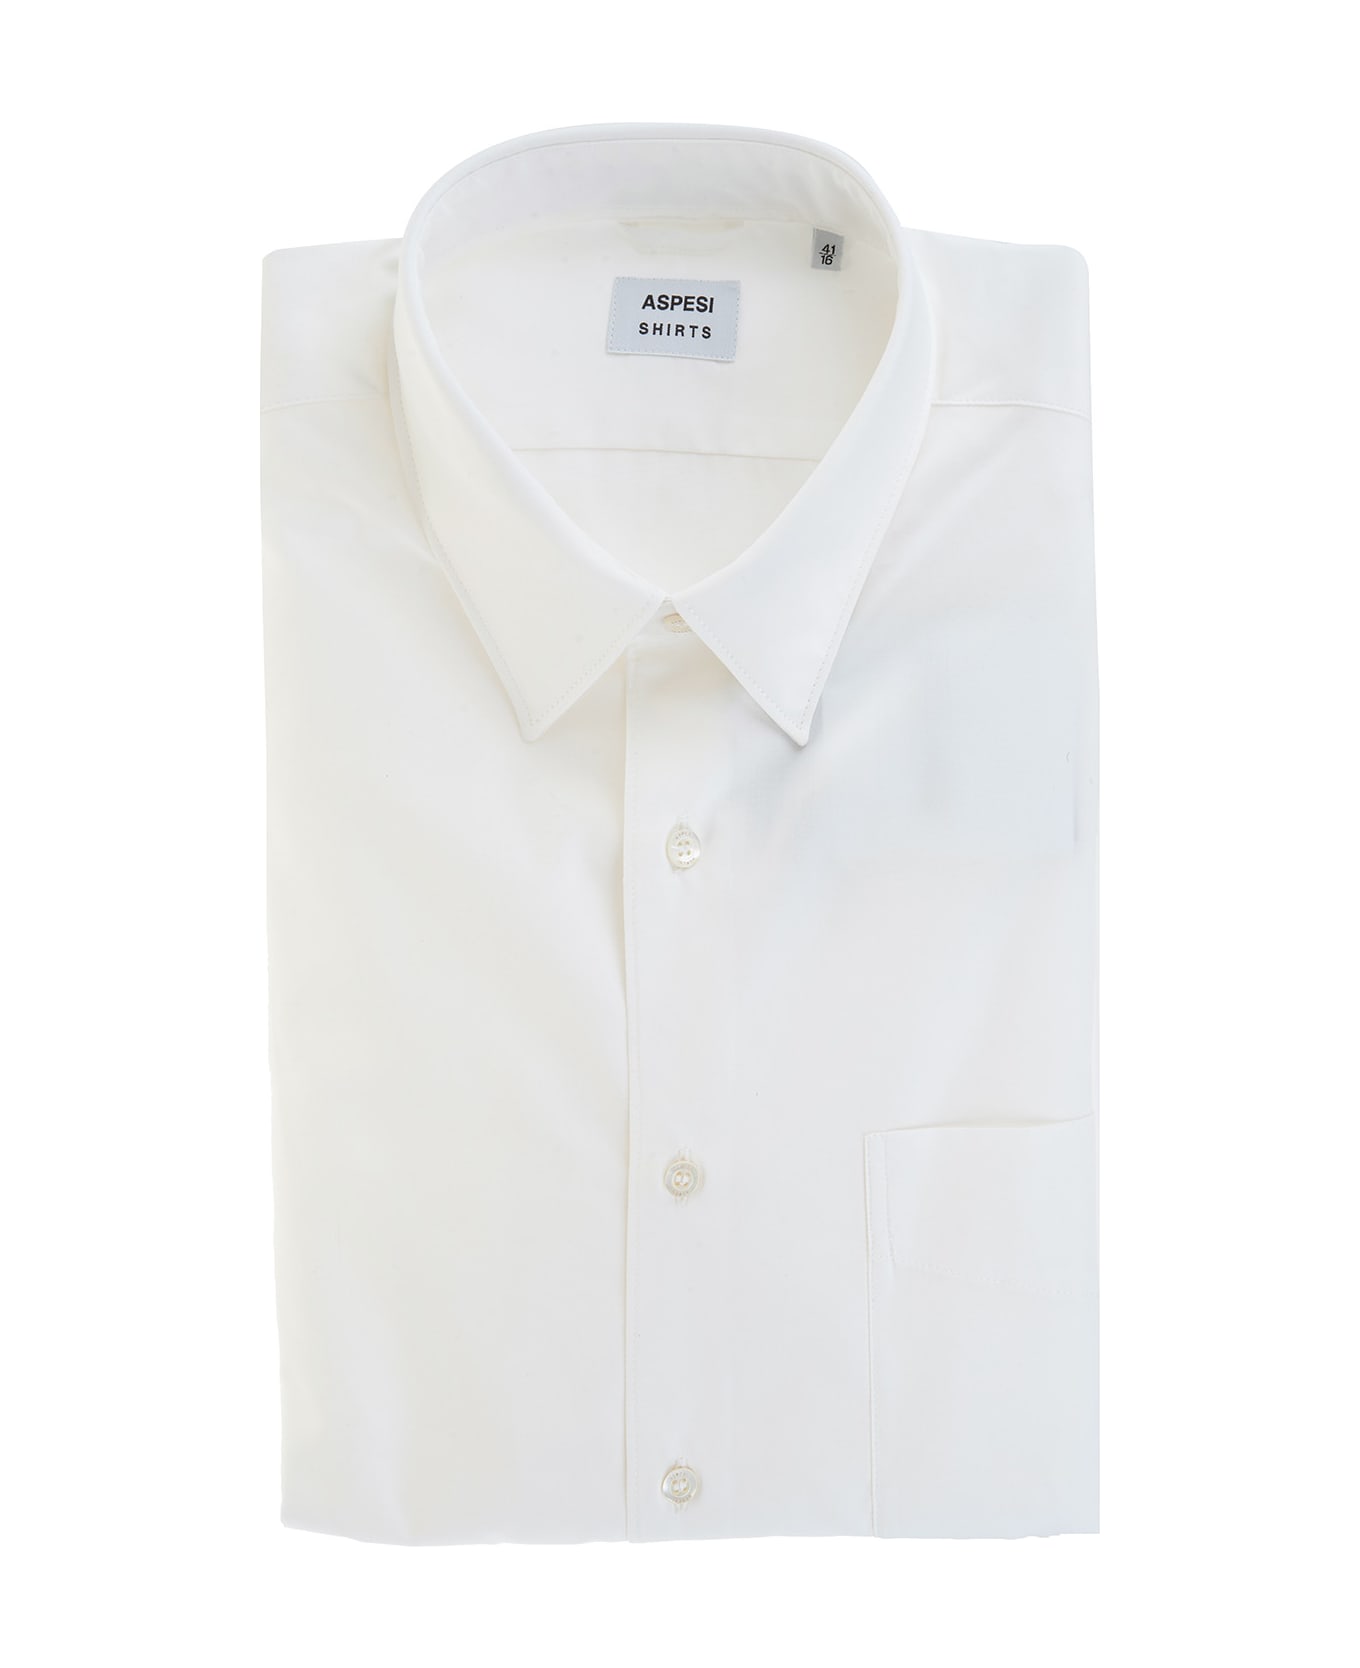 Aspesi Classic Shirt In White Cotton Poplin - Bianco